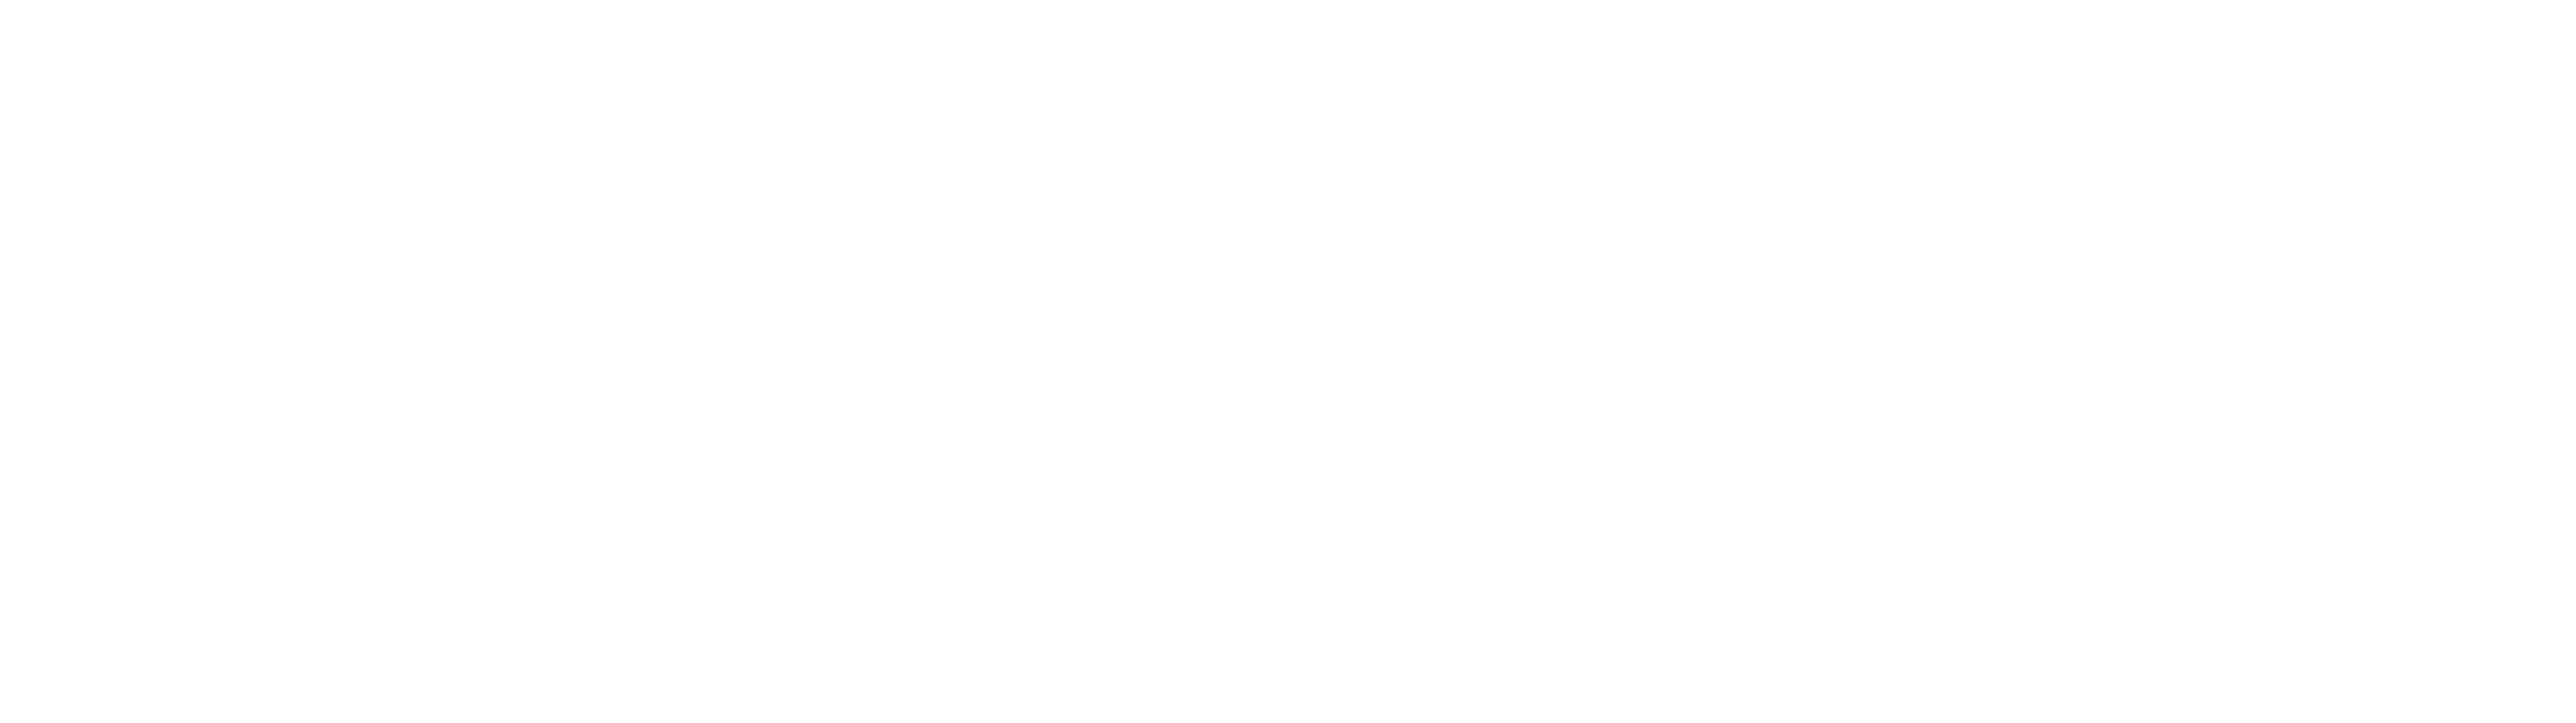 TigersEye Creative Logo